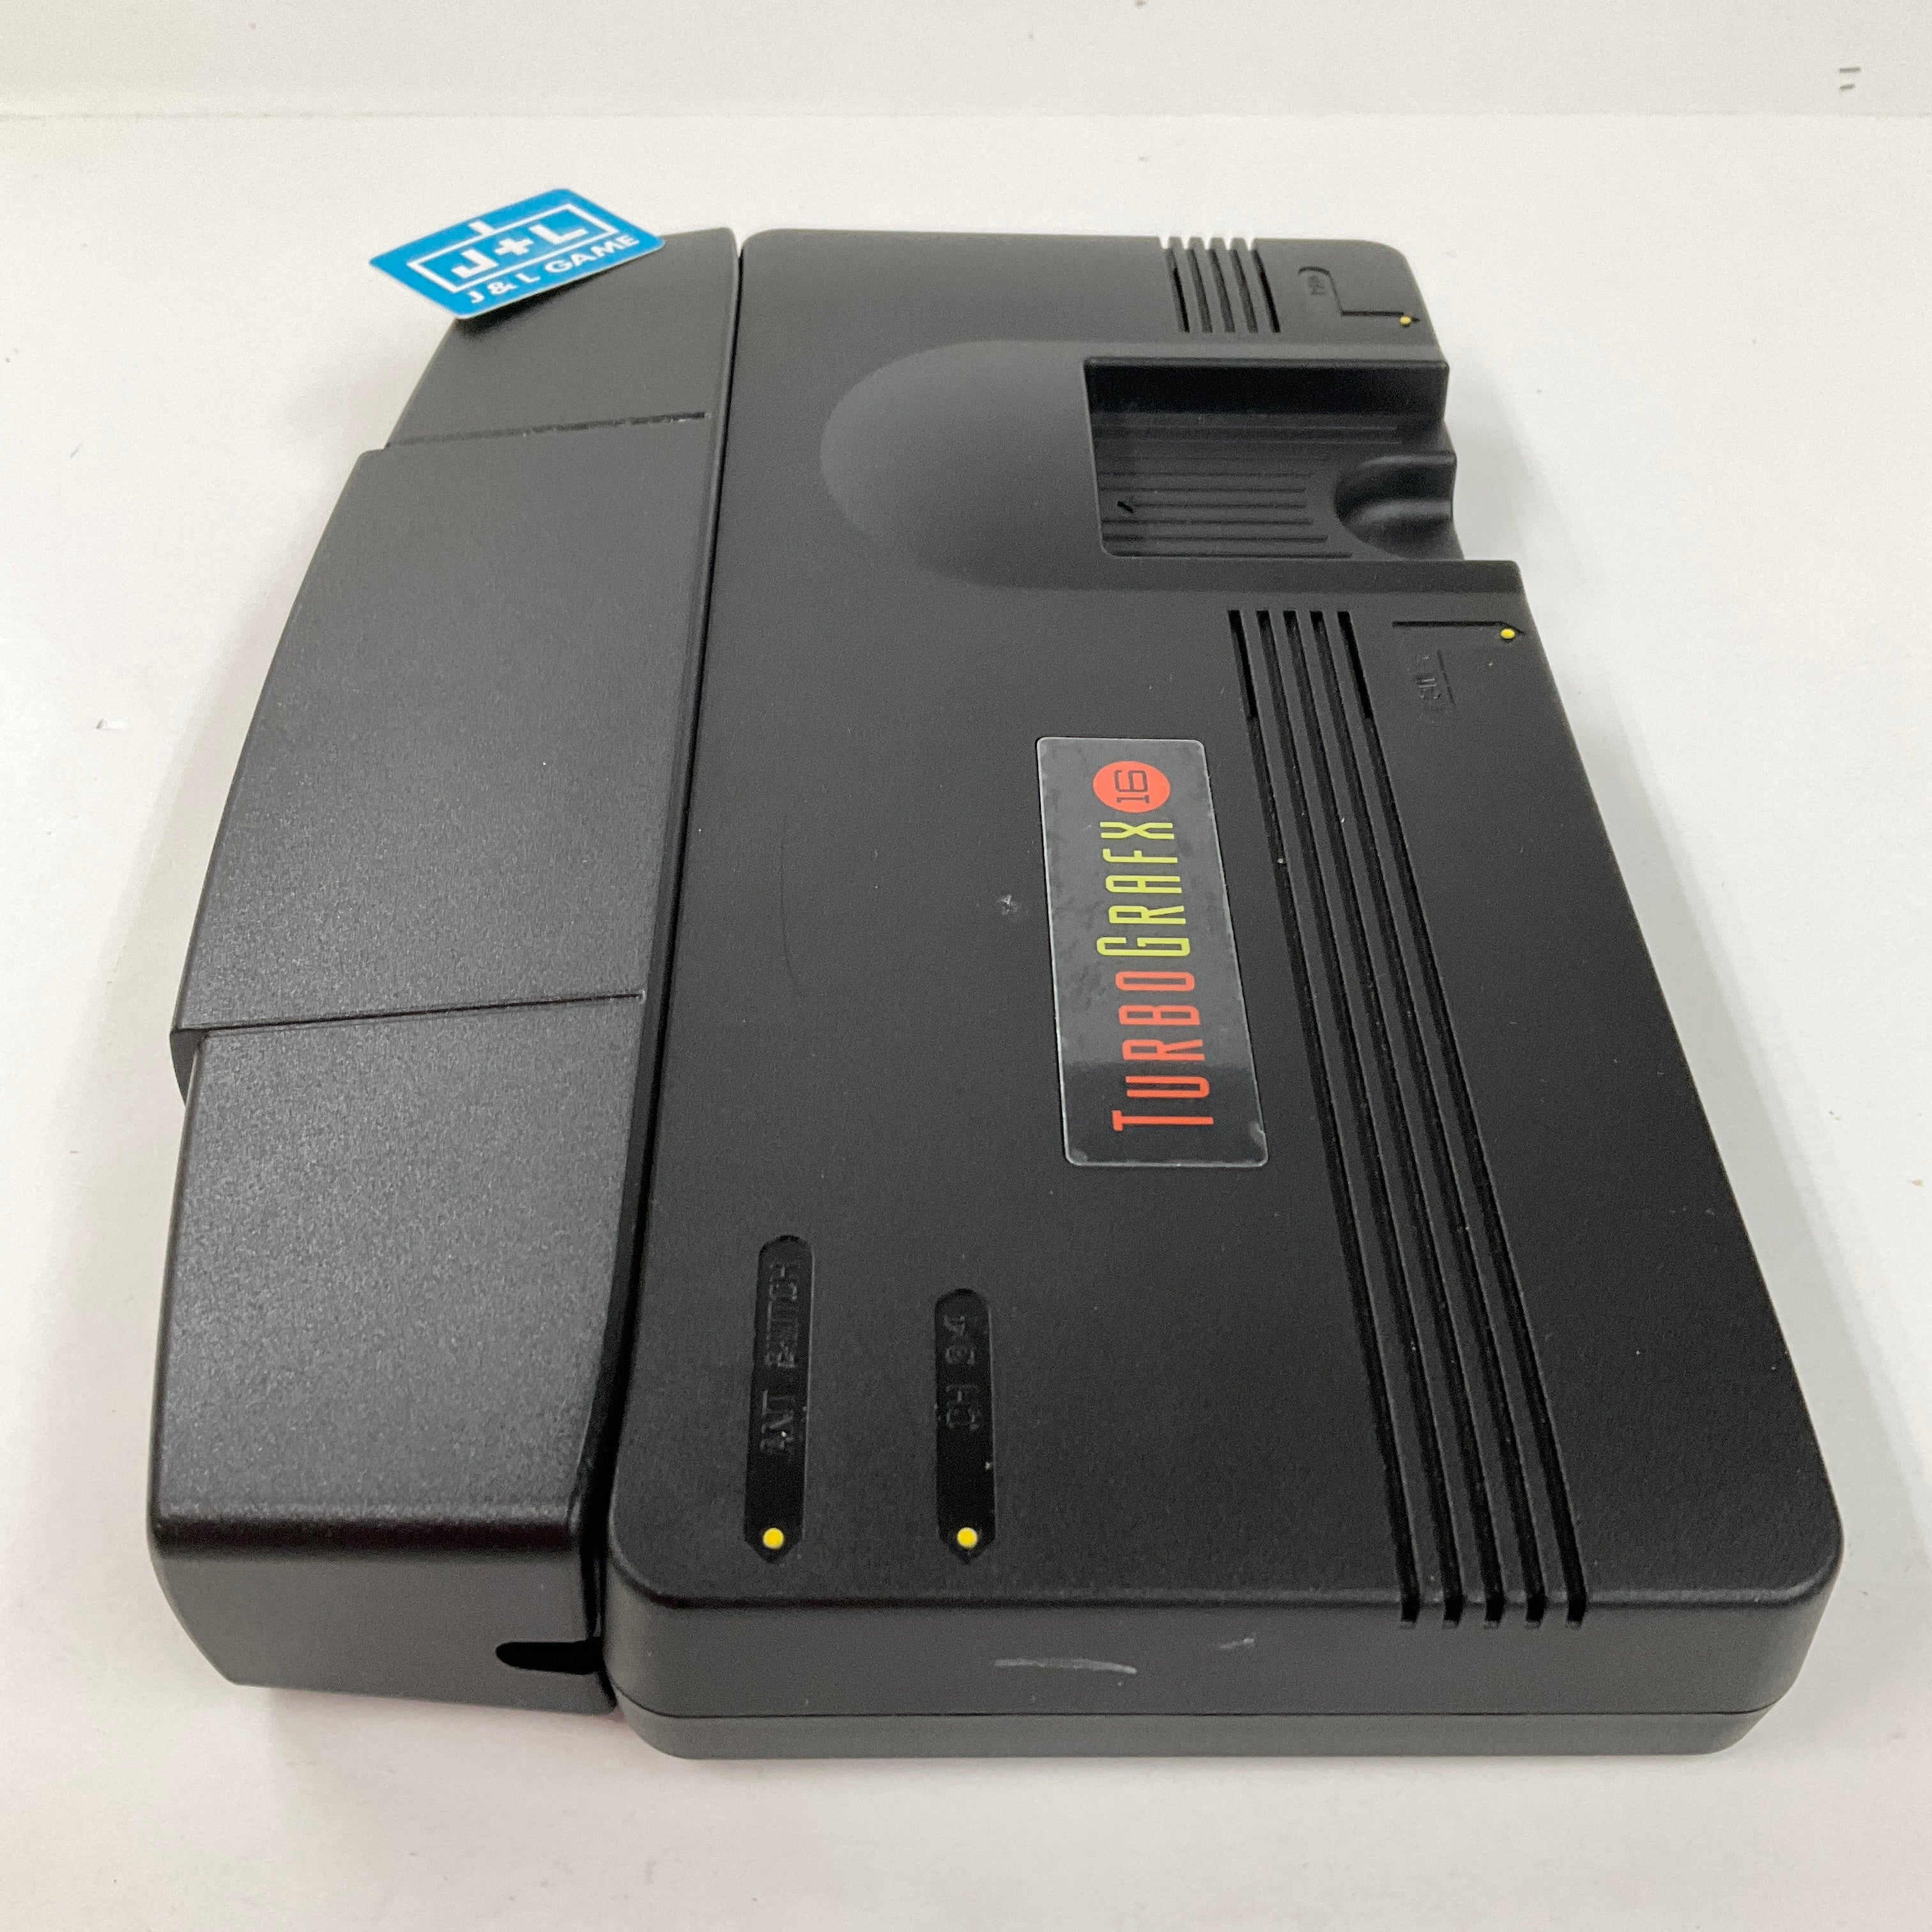 TurboGrafx-16 Mini Console - (TG16) TurboGrafx-16 [Pre-Owned] Video Games KONAMI JP   